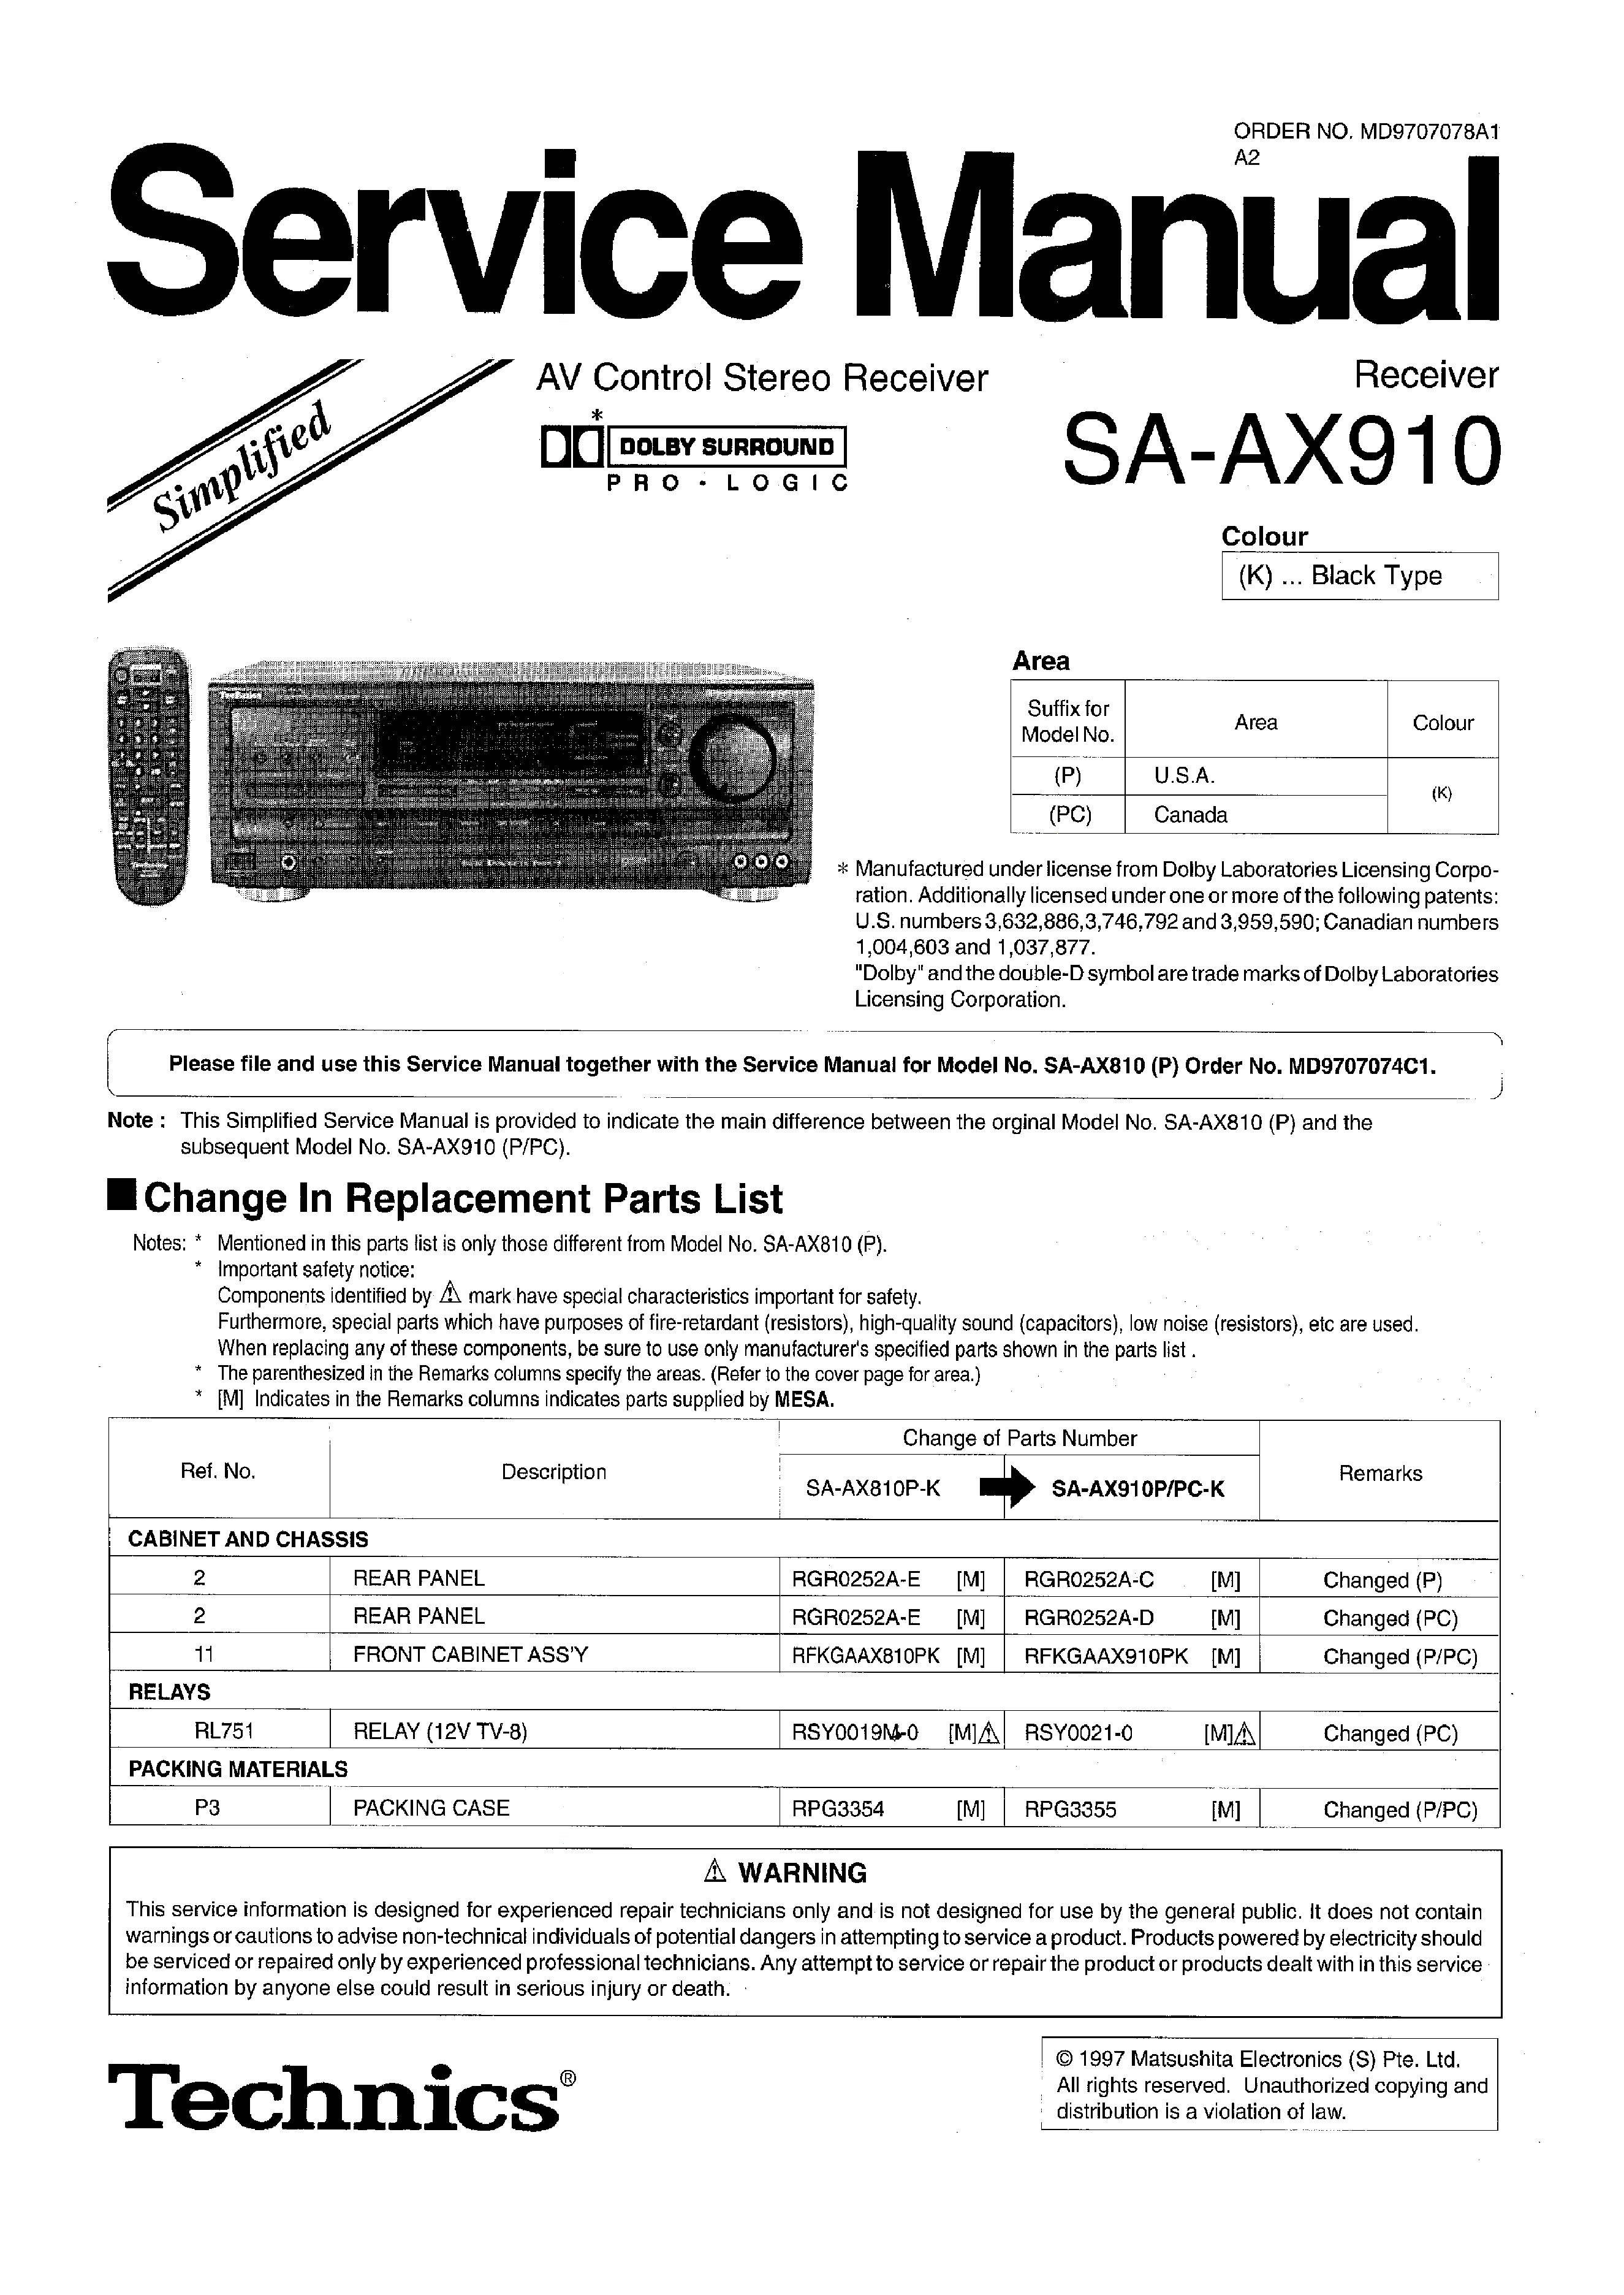 Technics SA-AX610